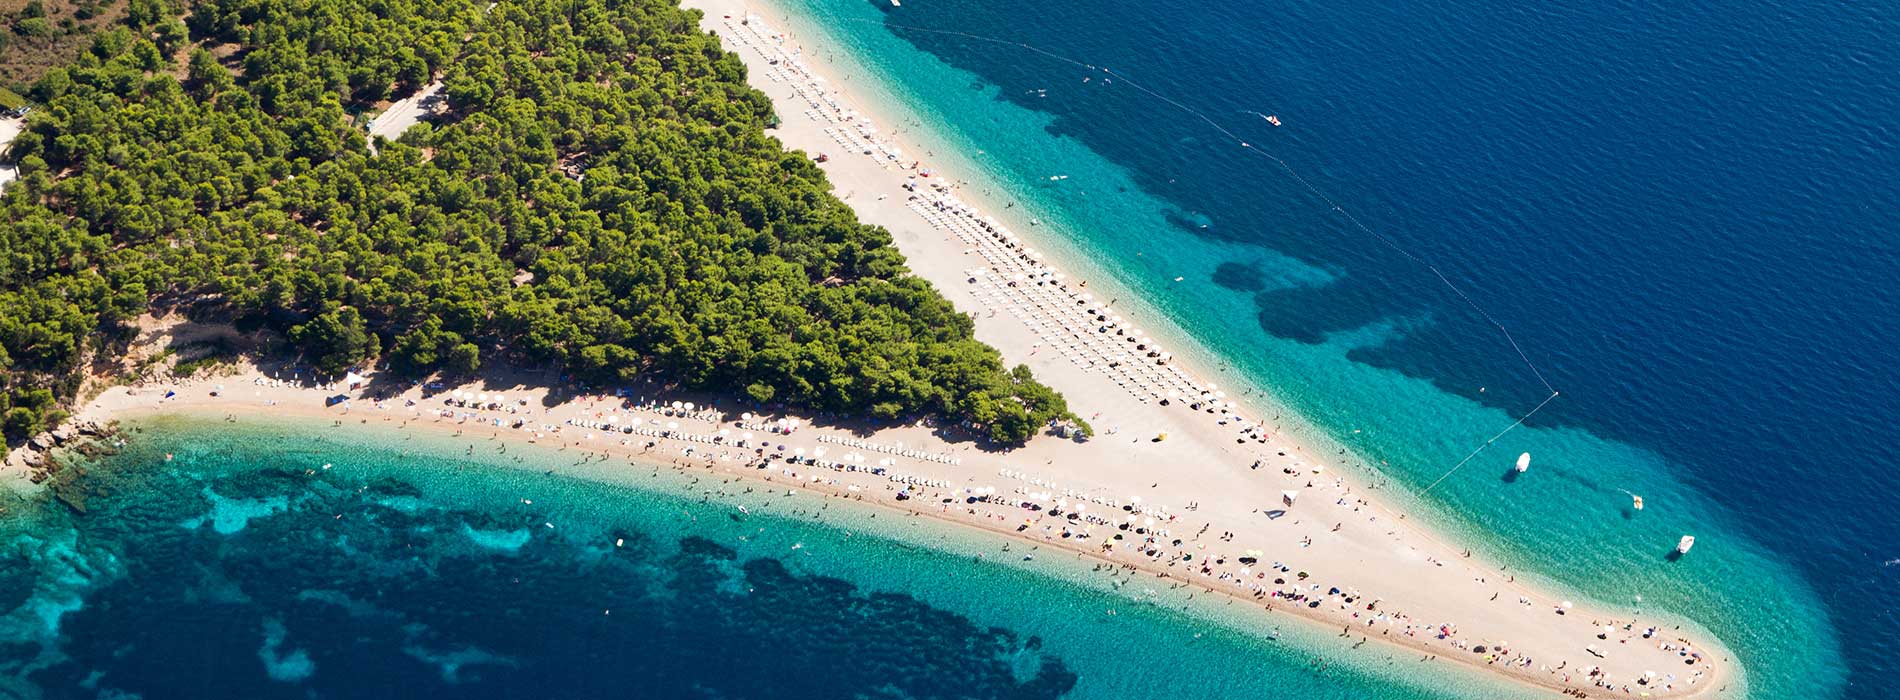 Aerial photograph of famous Zlatni Rat beach in Bol, Brac Island.jpg